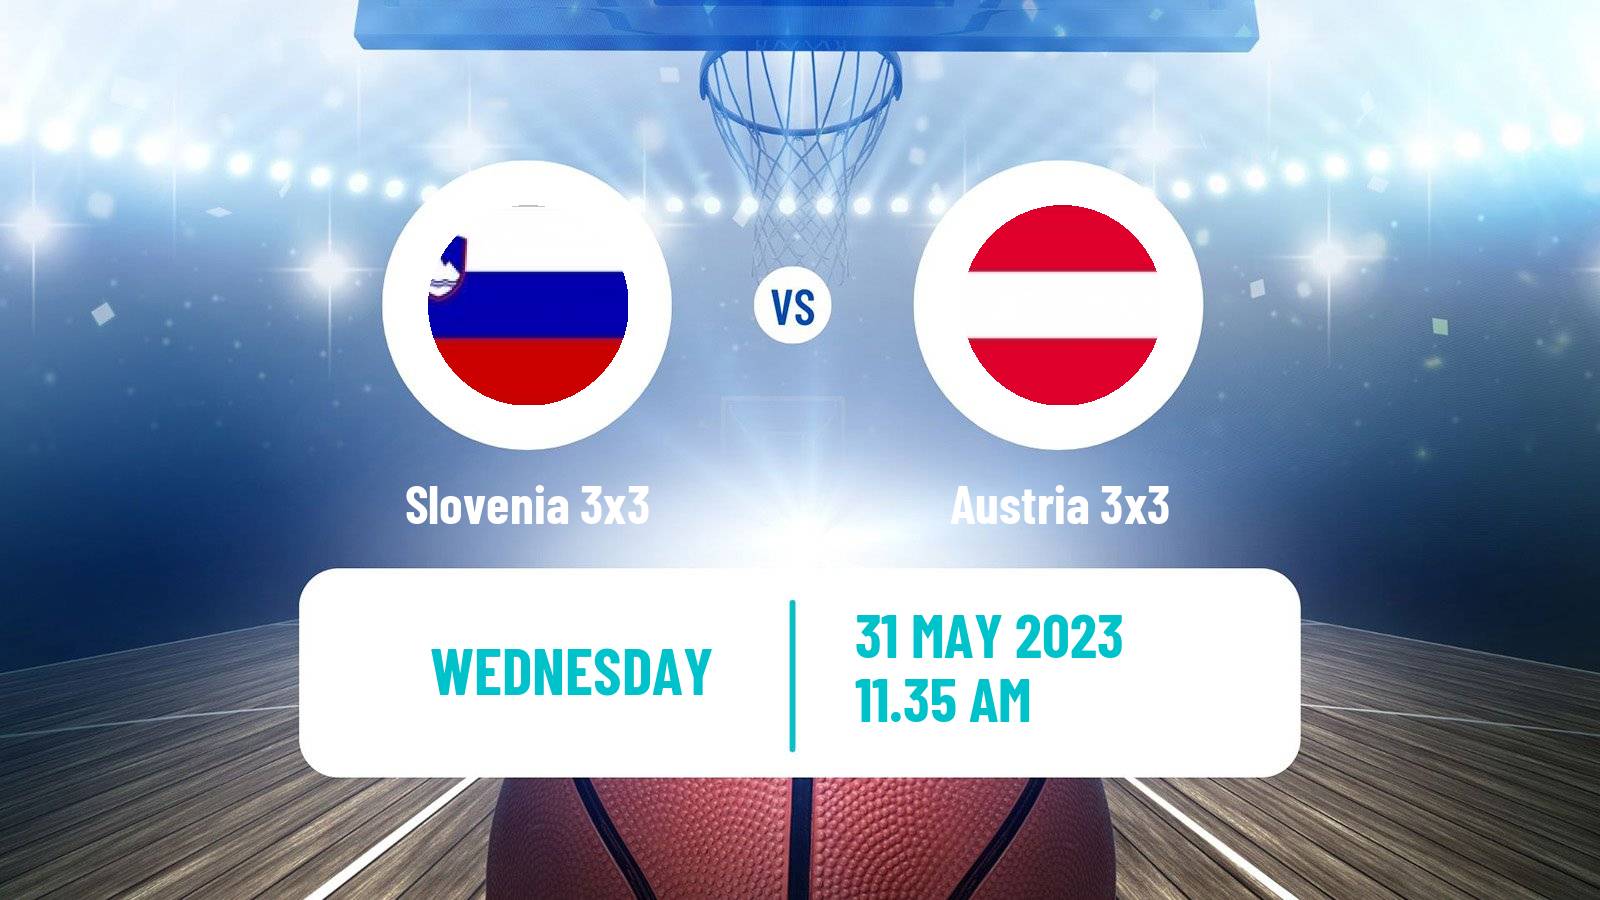 Basketball World Cup Basketball 3x3 Slovenia 3x3 - Austria 3x3